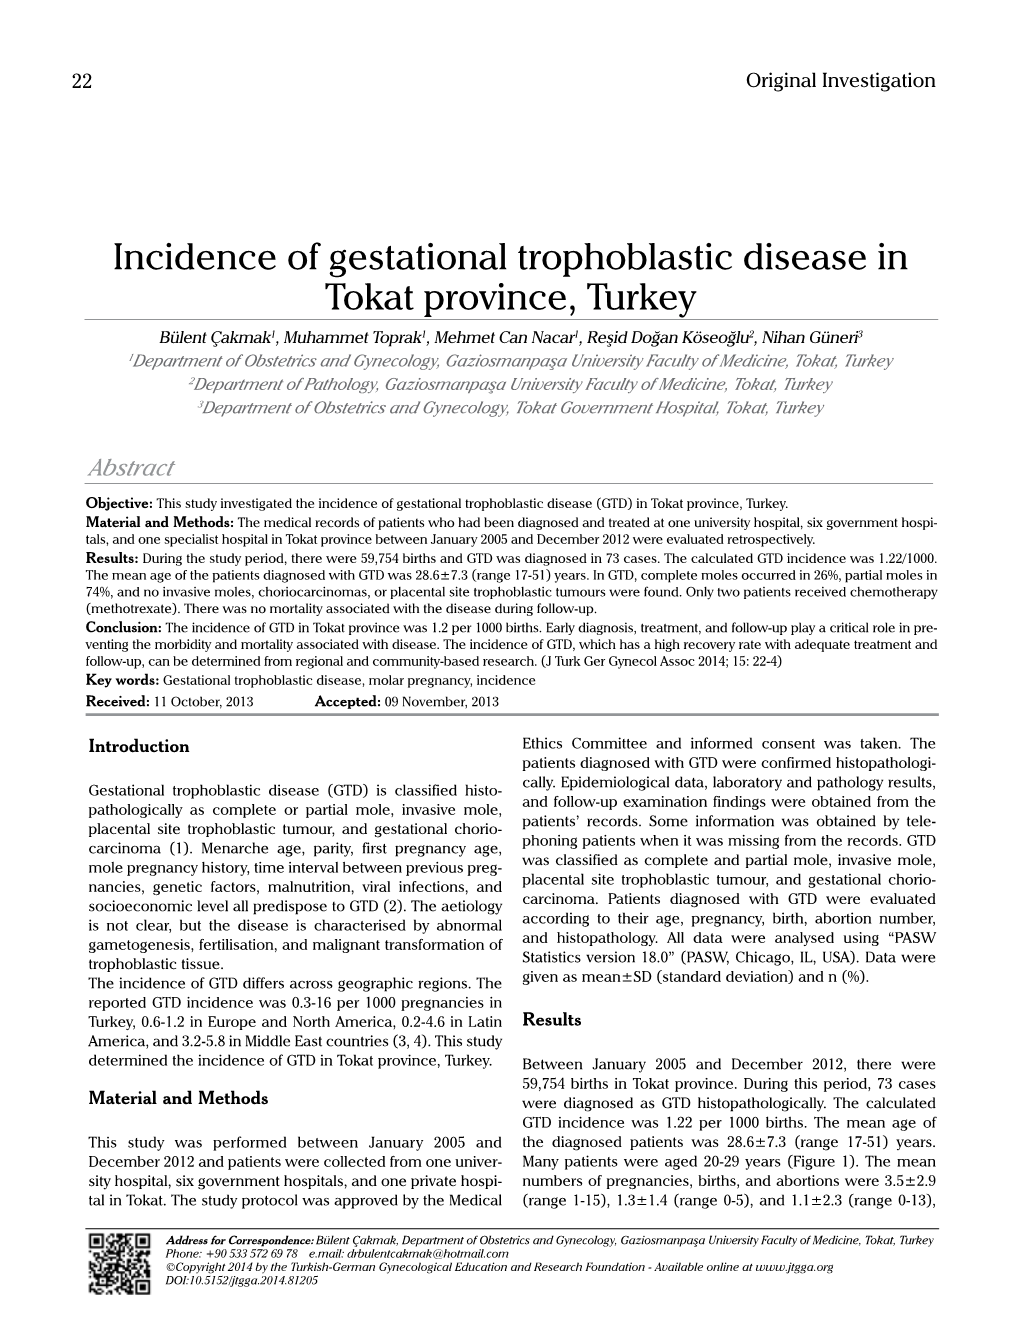 Incidence of Gestational Trophoblastic Disease in Tokat Province, Turkey